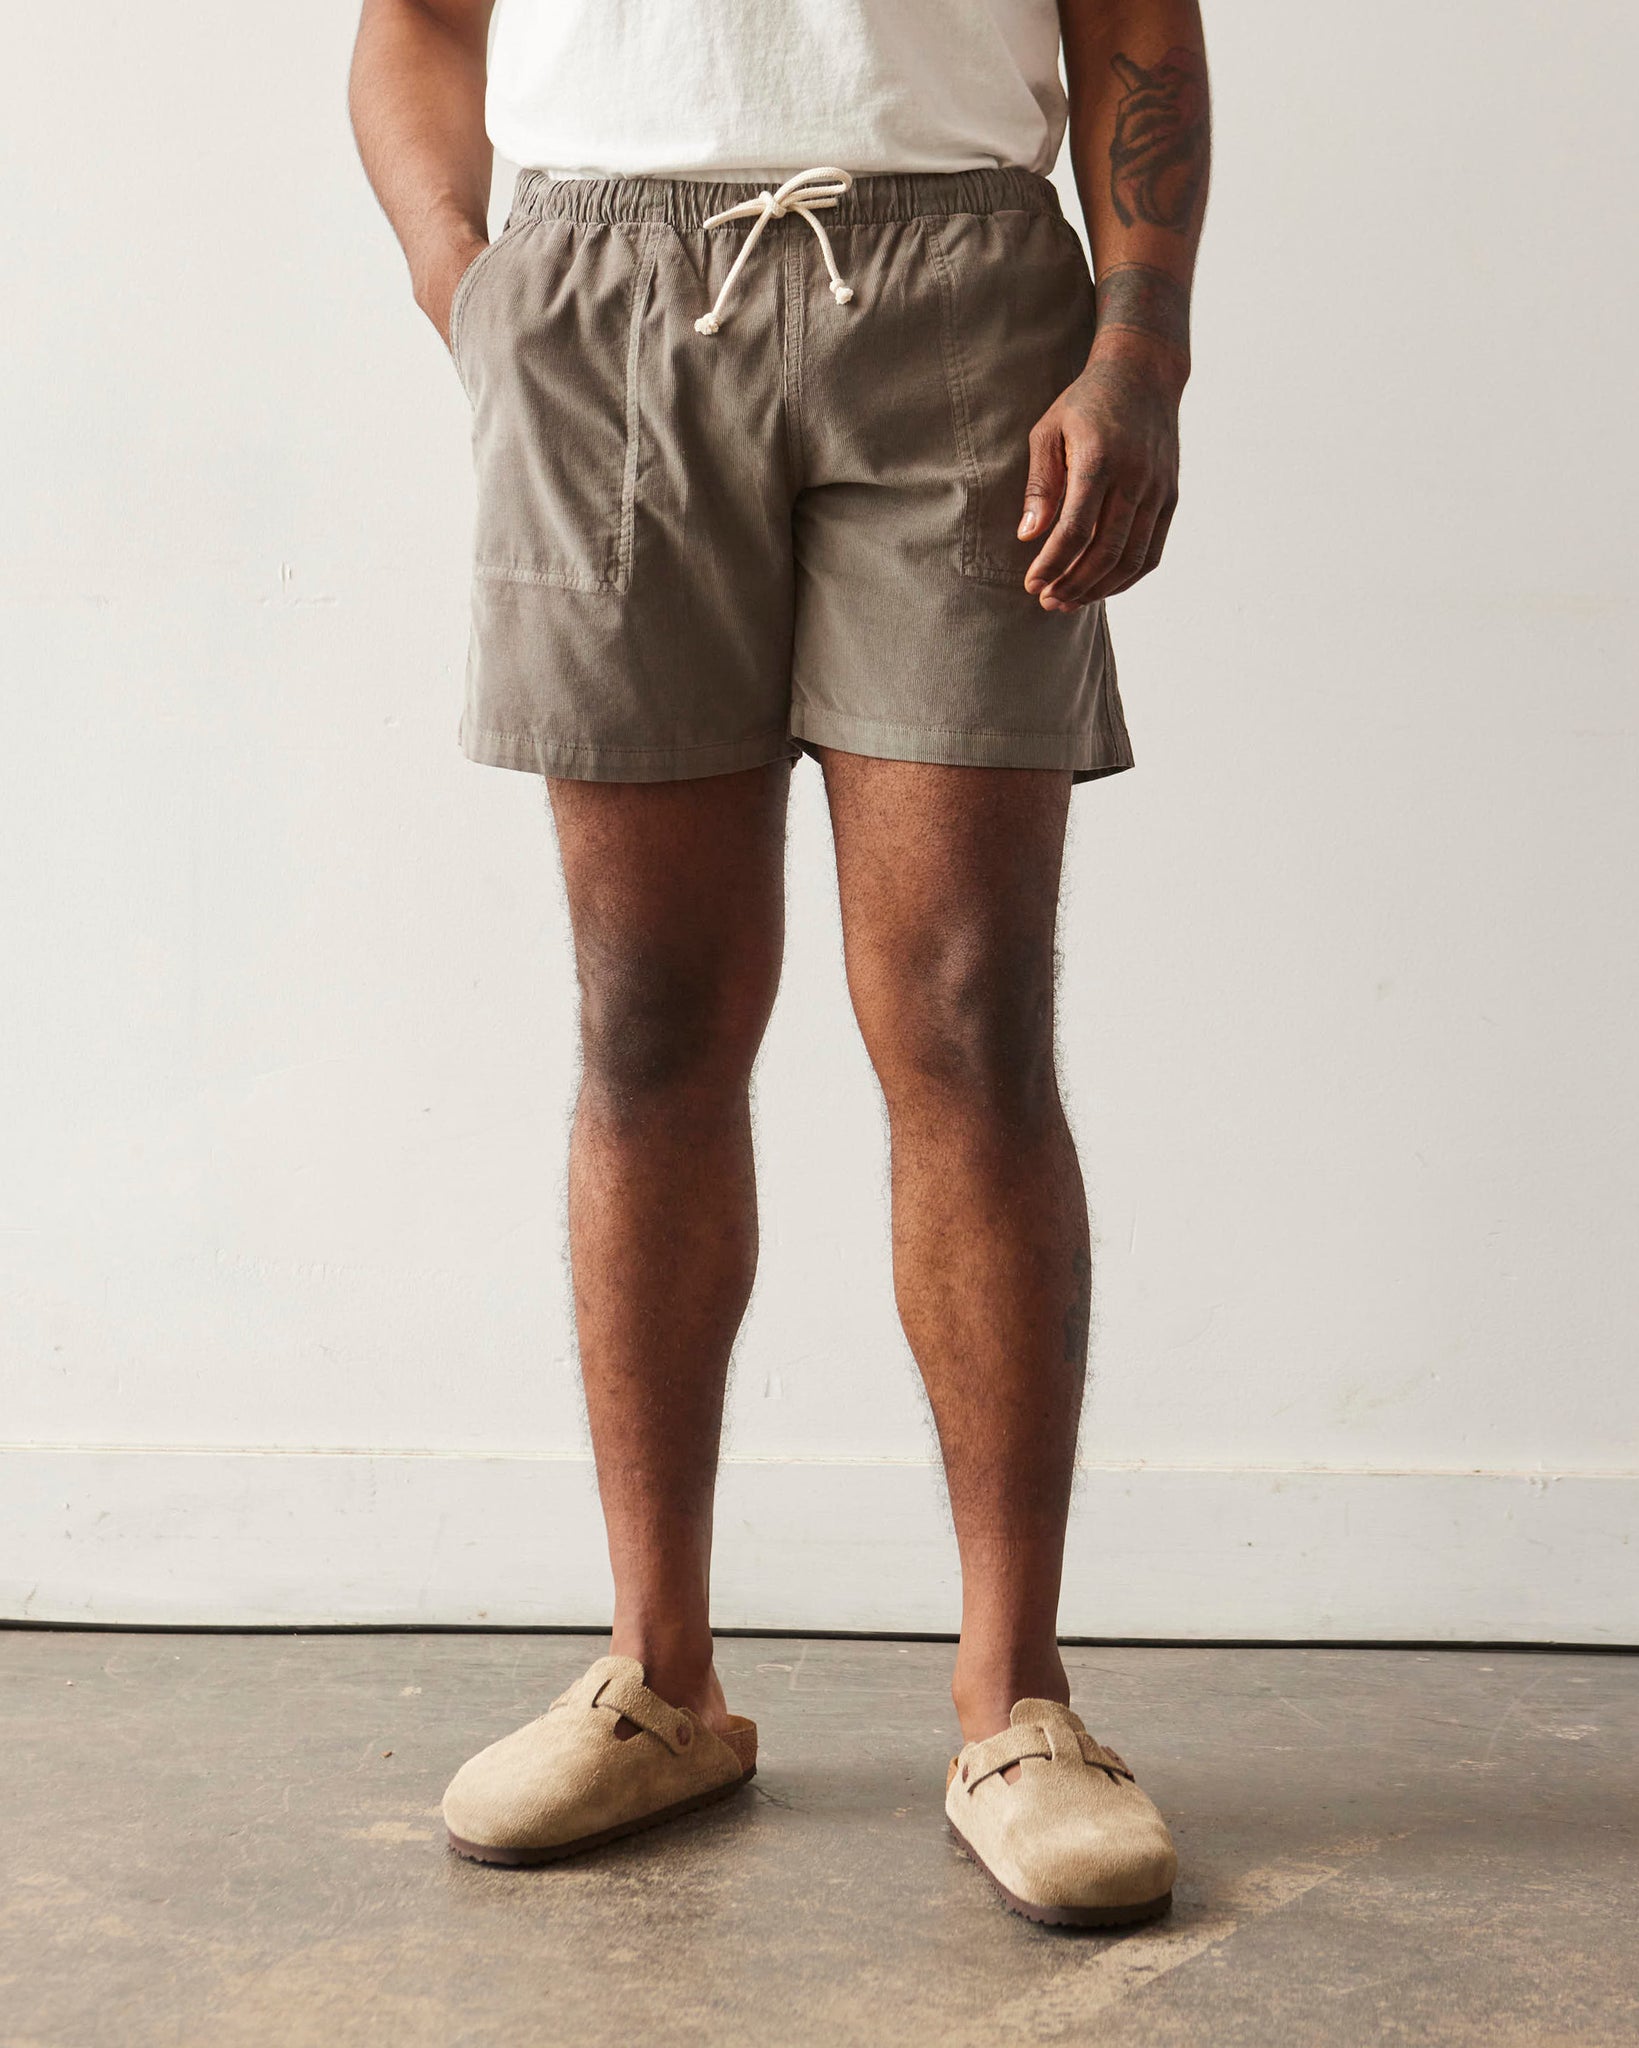 Aayomet Workout Shorts Men Mens Summer Fashion Casual Lace Up Unlined Beach  Shorts Beach Pants,White XL - Walmart.com